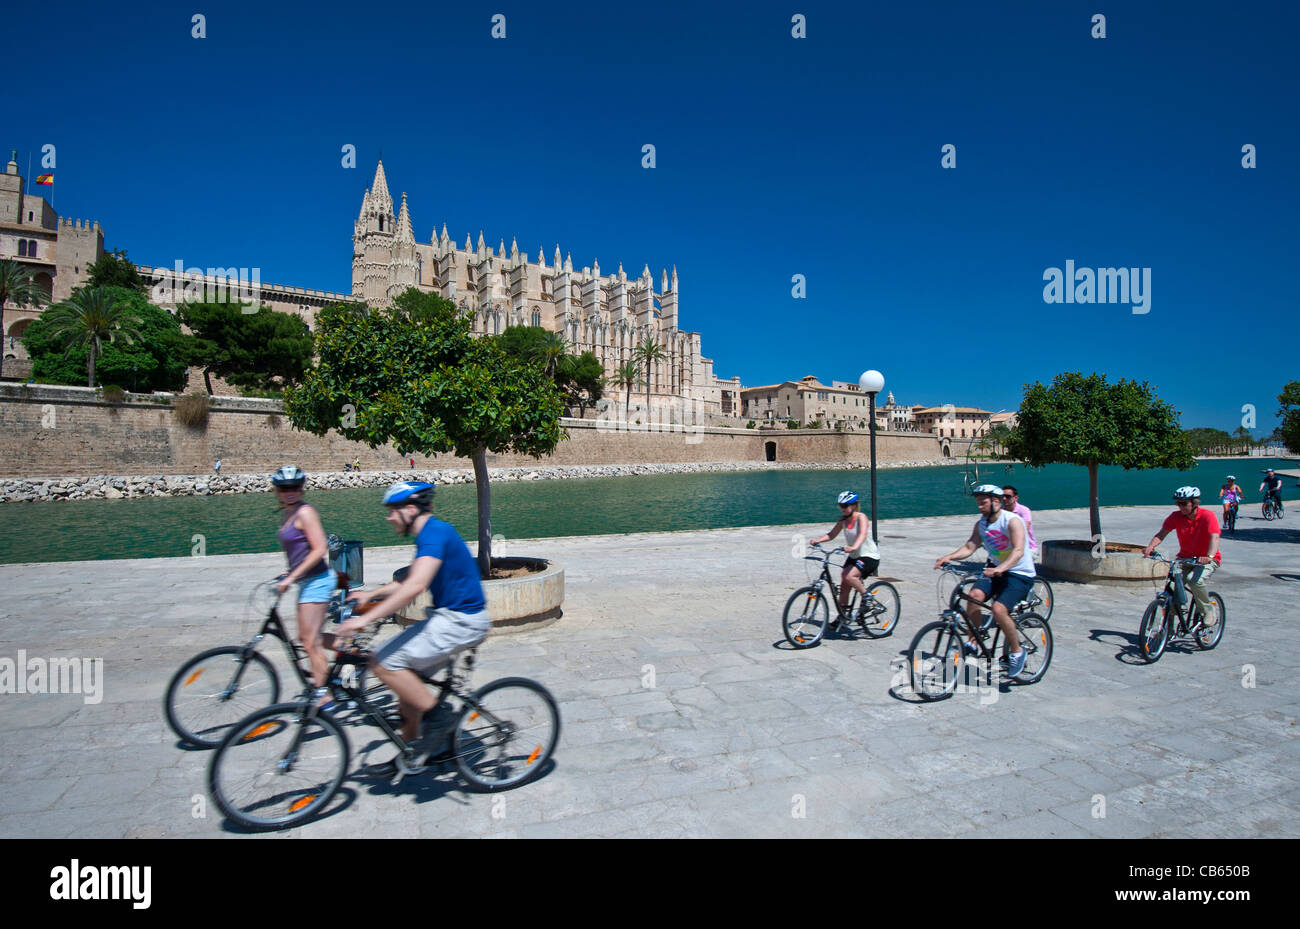 PALMA MALLORCA CYCLING Tour group of cyclists riding near Palma Cathedral in Parc de la Mar Palma historic center Mallorca Spain Stock Photo